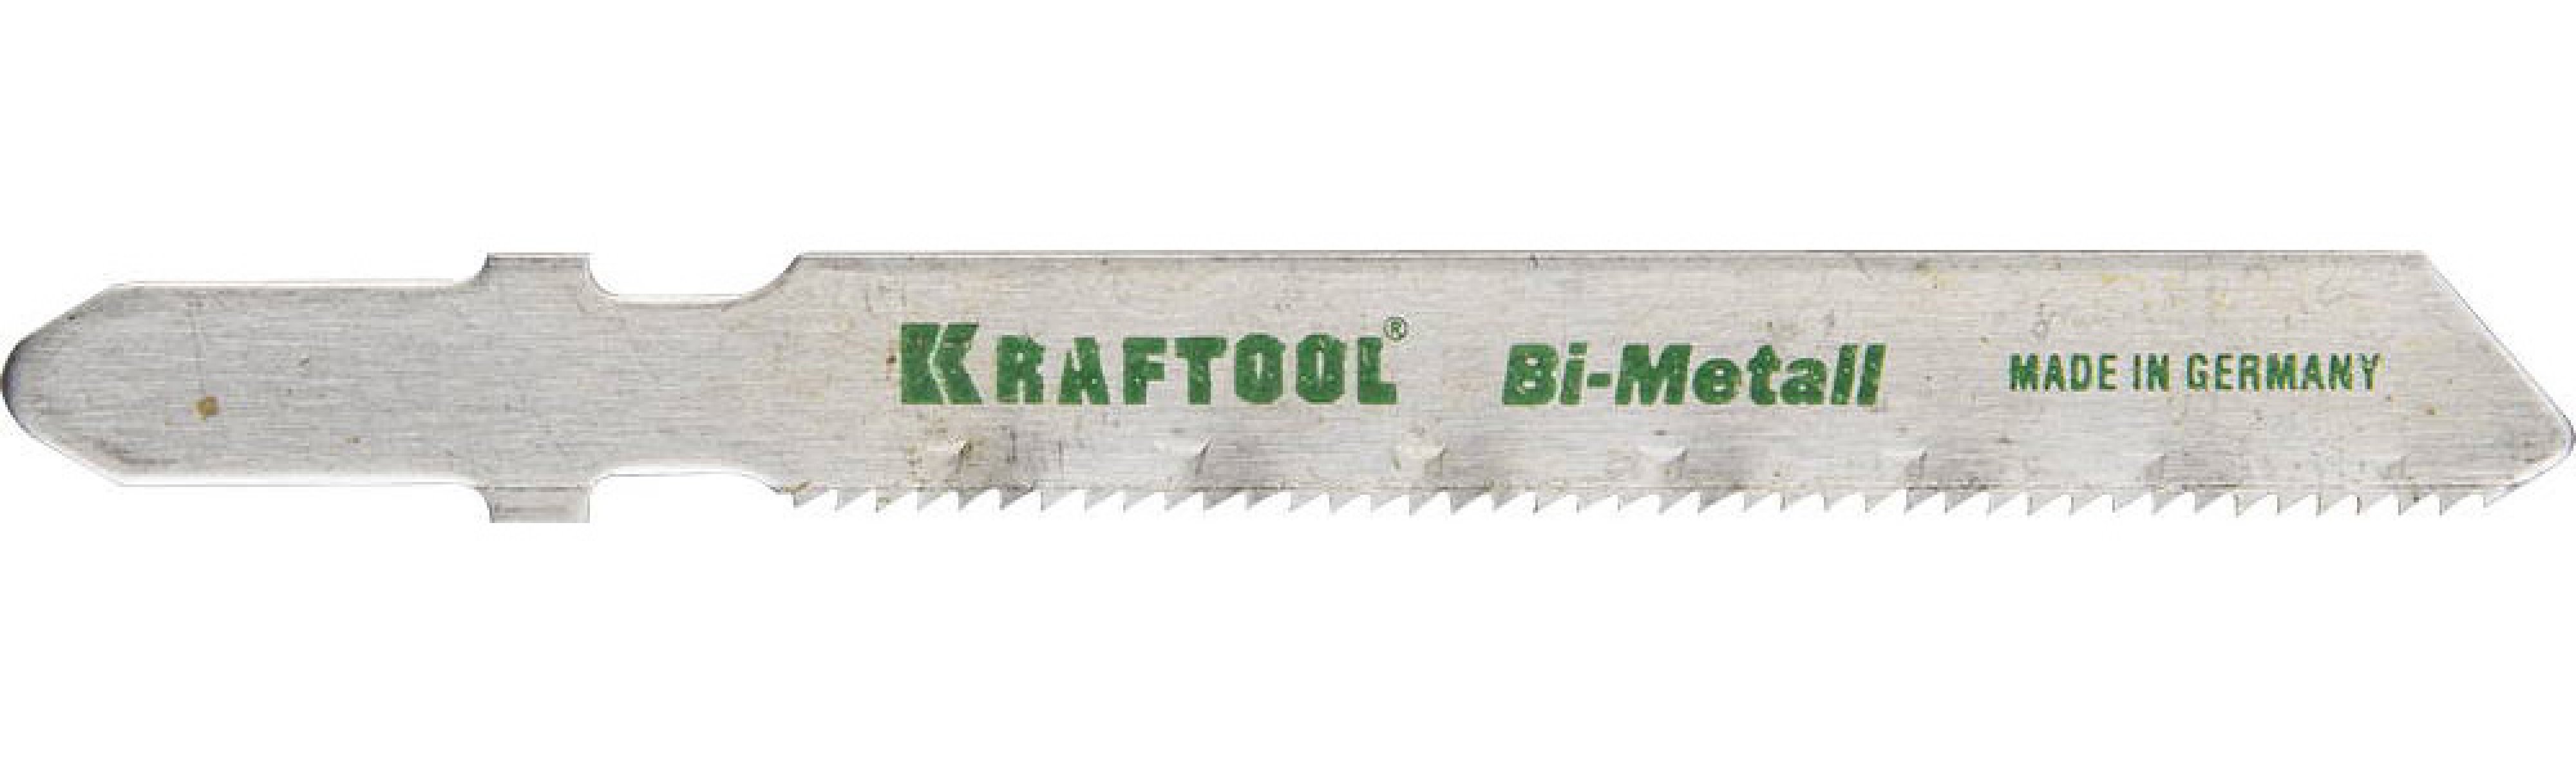 KRAFTOOL   Bi-Met, EU-.,  1.2, 50, 2 .,    159555-1.2 (159555-1,2)